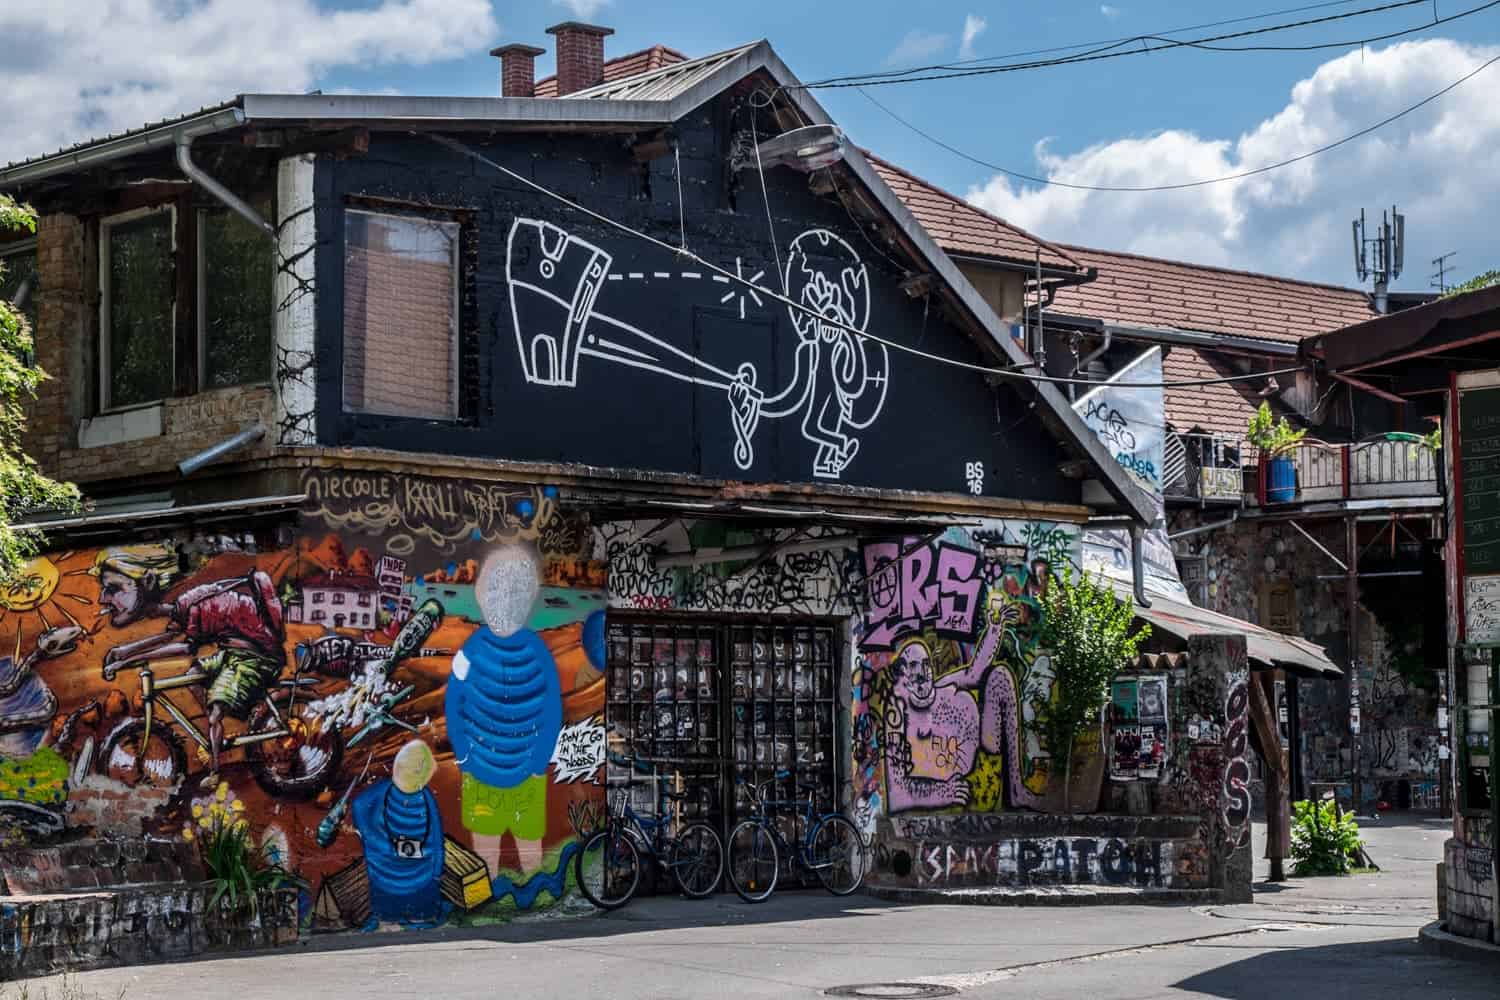 Wall art murals in Metelkova in Ljubljana, Slovenia